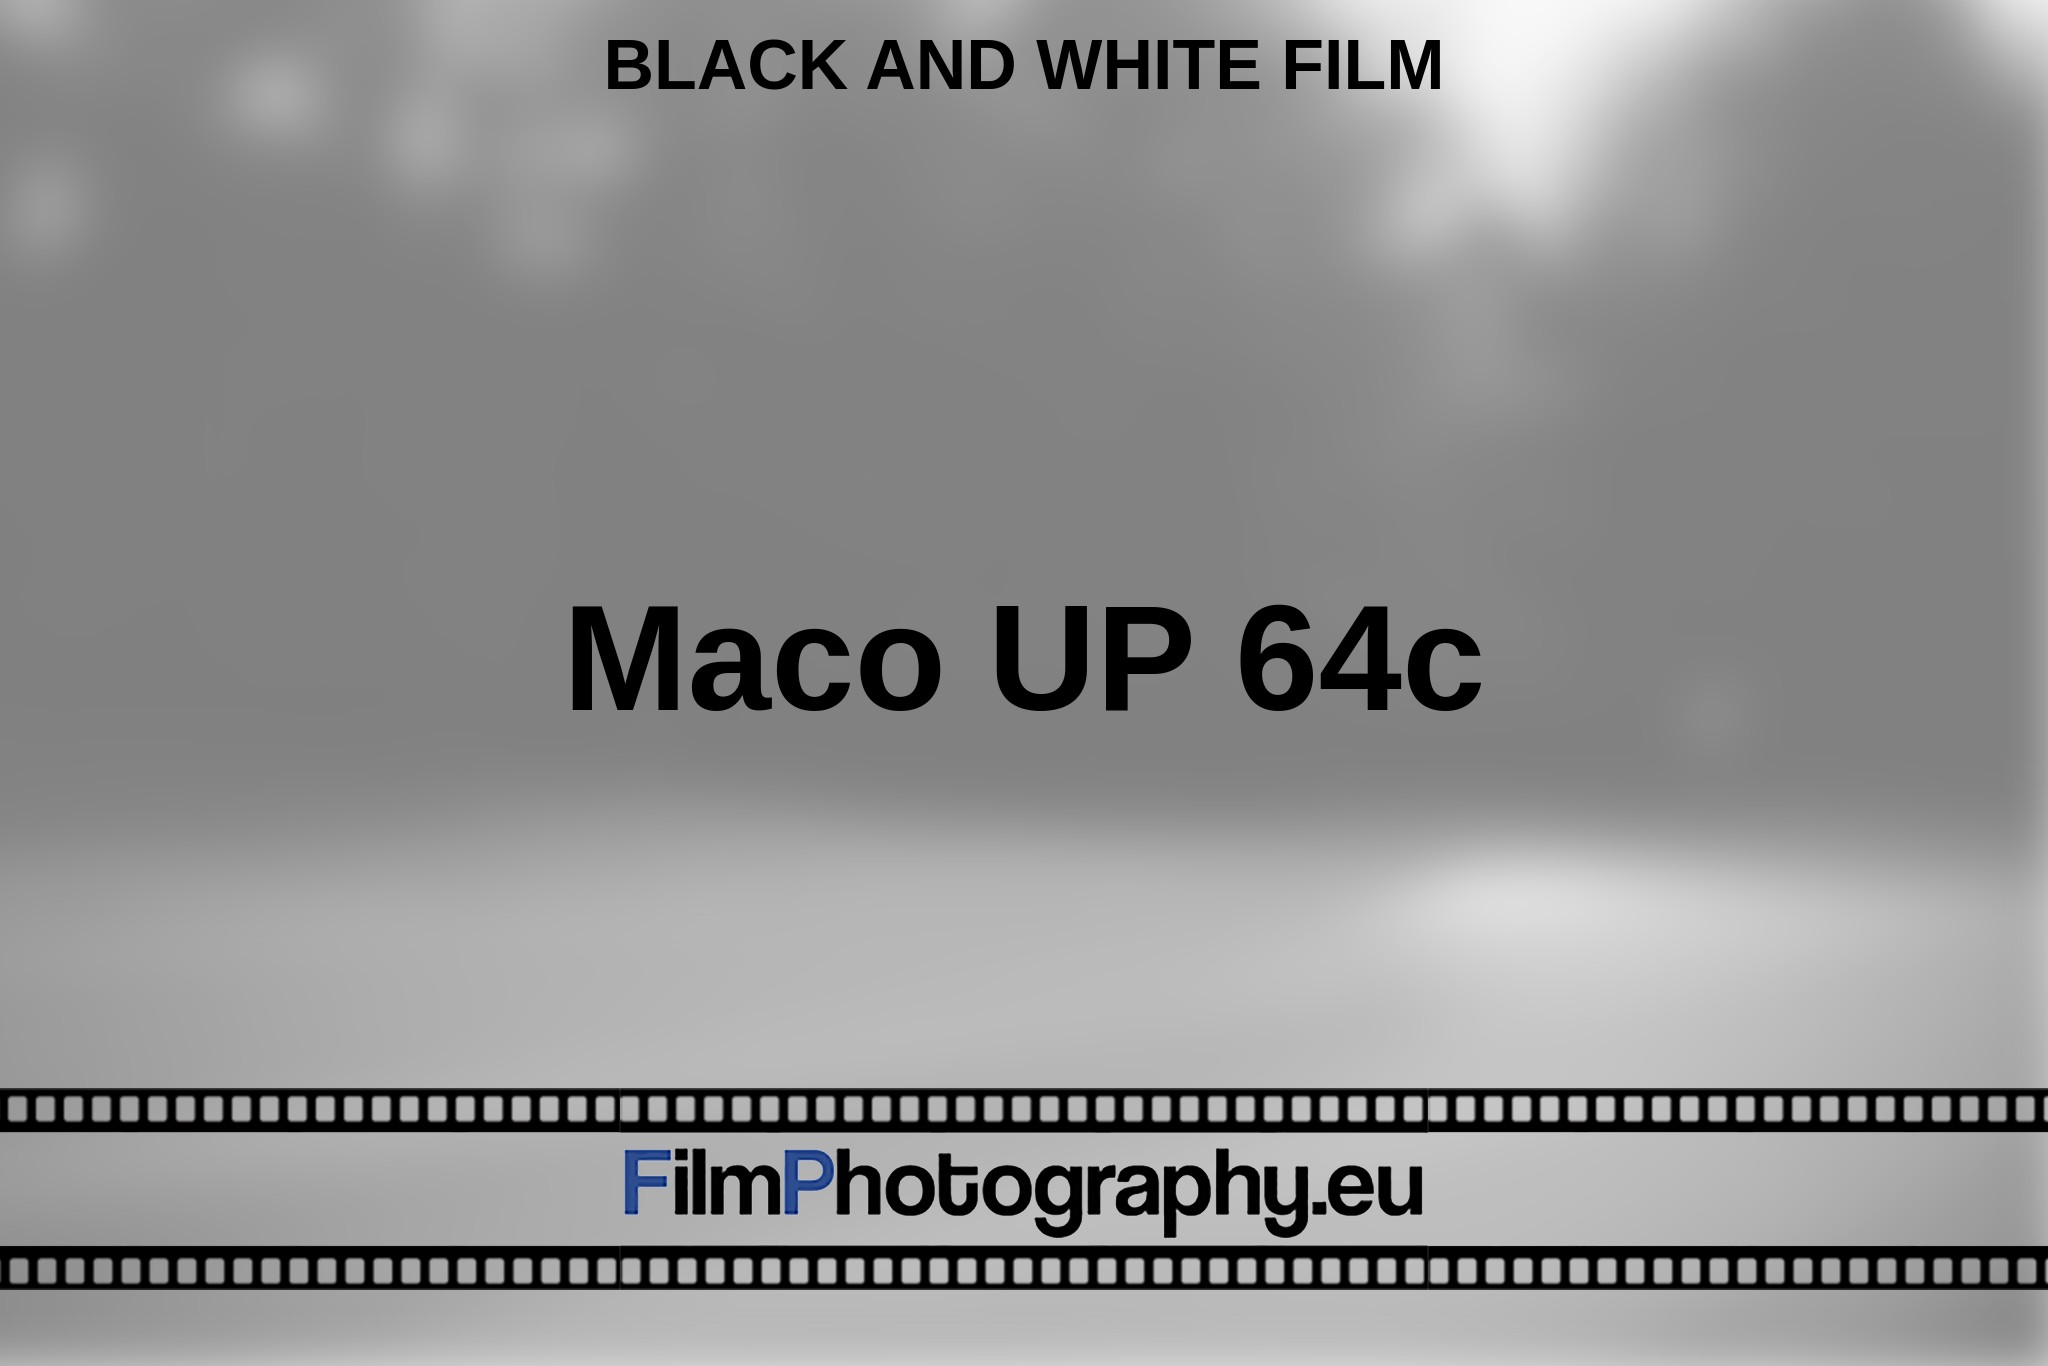 maco-up-64c-black-and-white-film-en-bnv.jpg